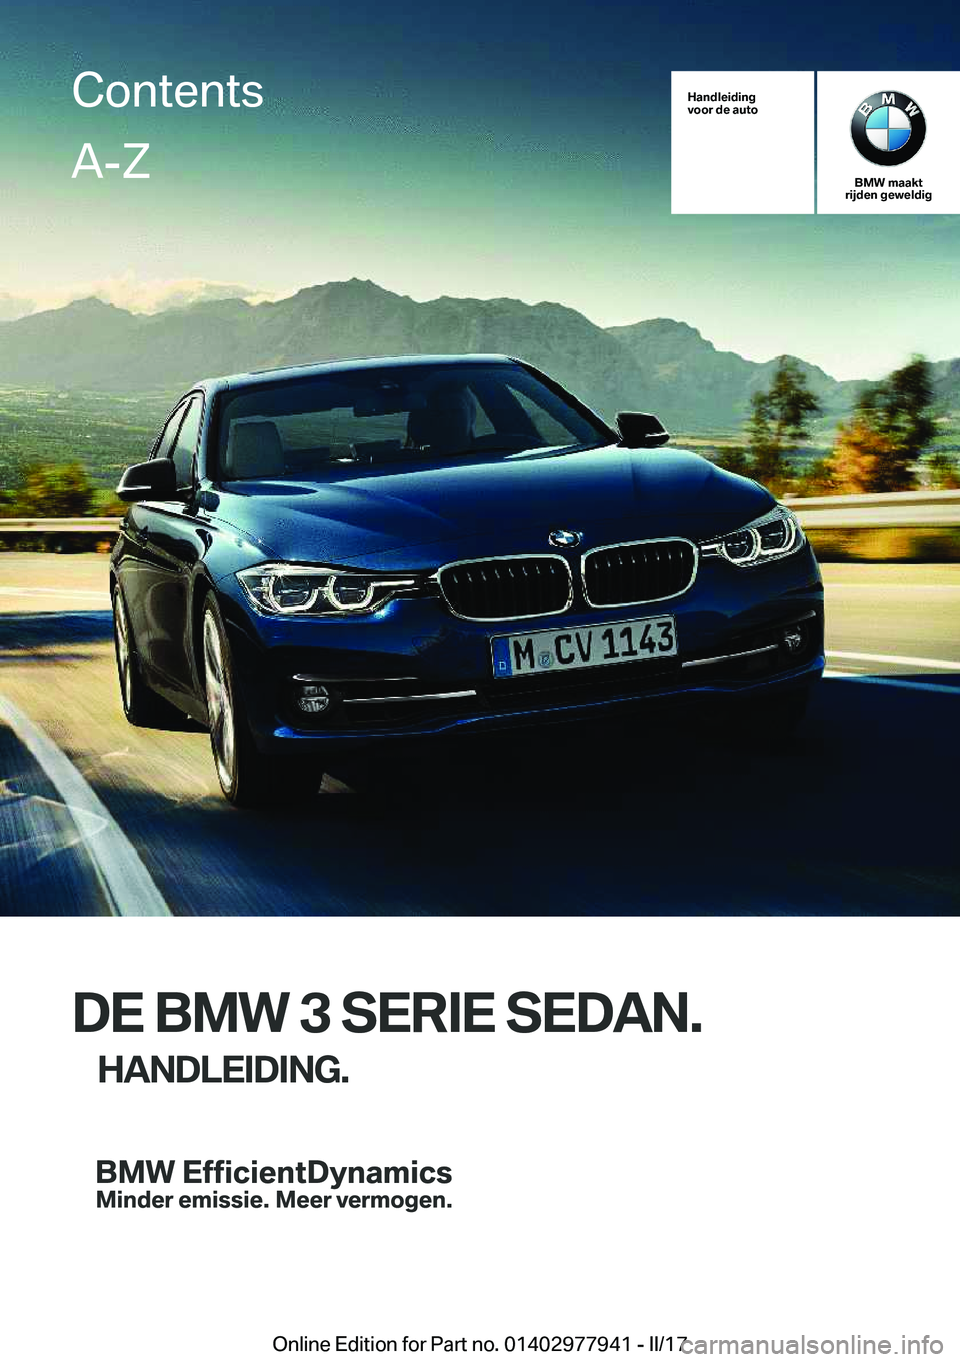 BMW 3 SERIES 2017  Instructieboekjes (in Dutch) �H�a�n�d�l�e�i�d�i�n�g
�v�o�o�r��d�e��a�u�t�o
�B�M�W��m�a�a�k�t
�r�i�j�d�e�n��g�e�w�e�l�d�i�g
�D�E��B�M�W��3��S�E�R�I�E��S�E�D�A�N�.
�H�A�N�D�L�E�I�D�I�N�G�.
�C�o�n�t�e�n�t�s�A�-�Z
�O�n�l�i�n�